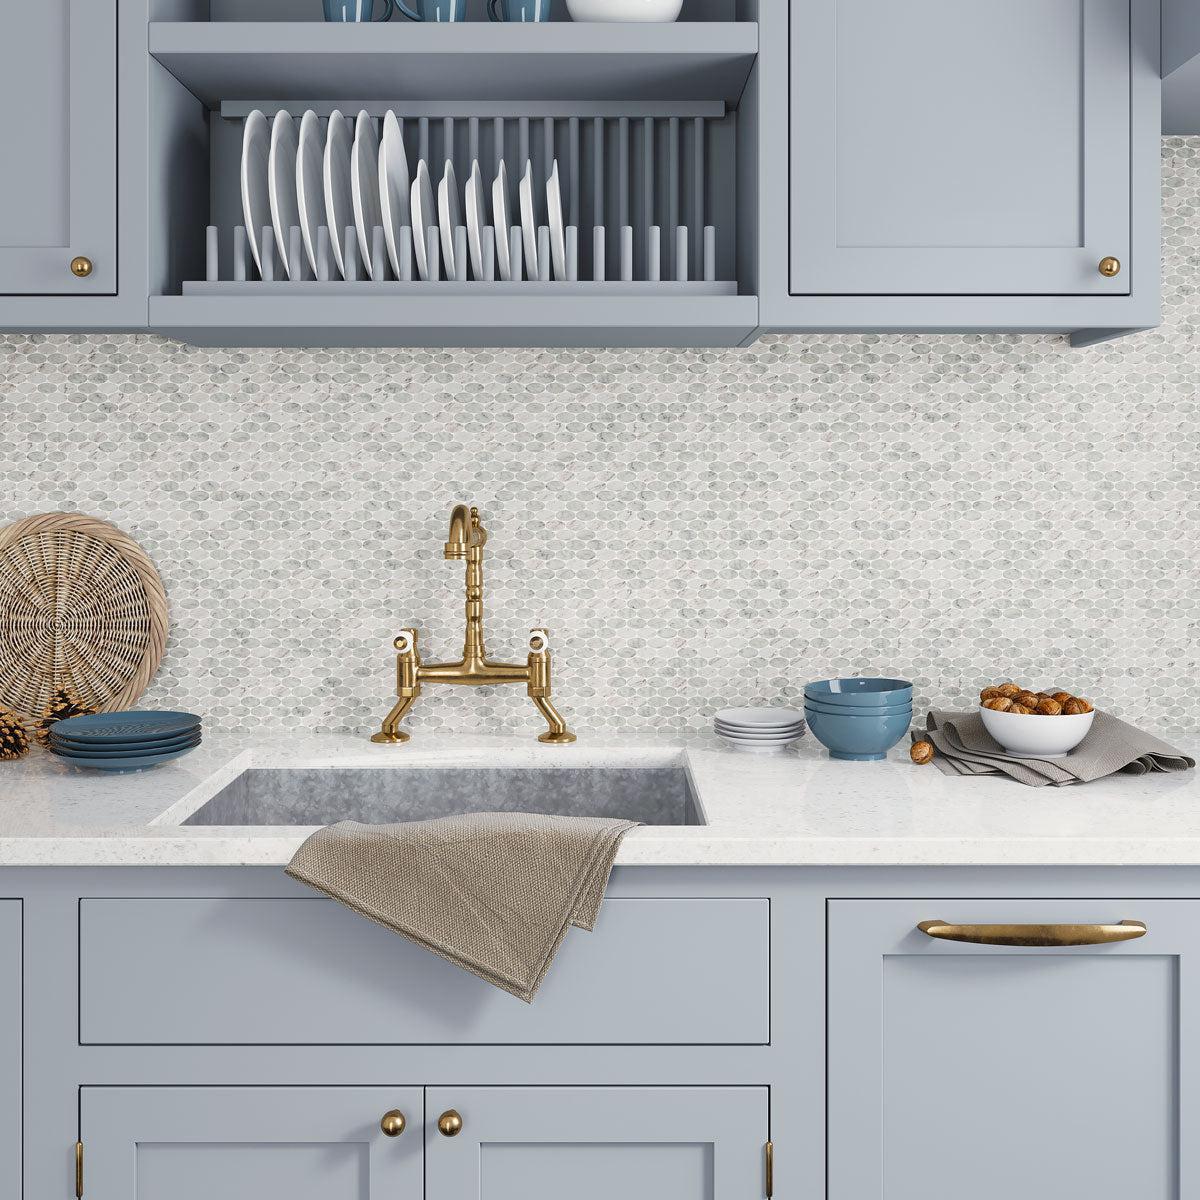 Blue kitchen cabinets with white marble tile kitchen backsplash